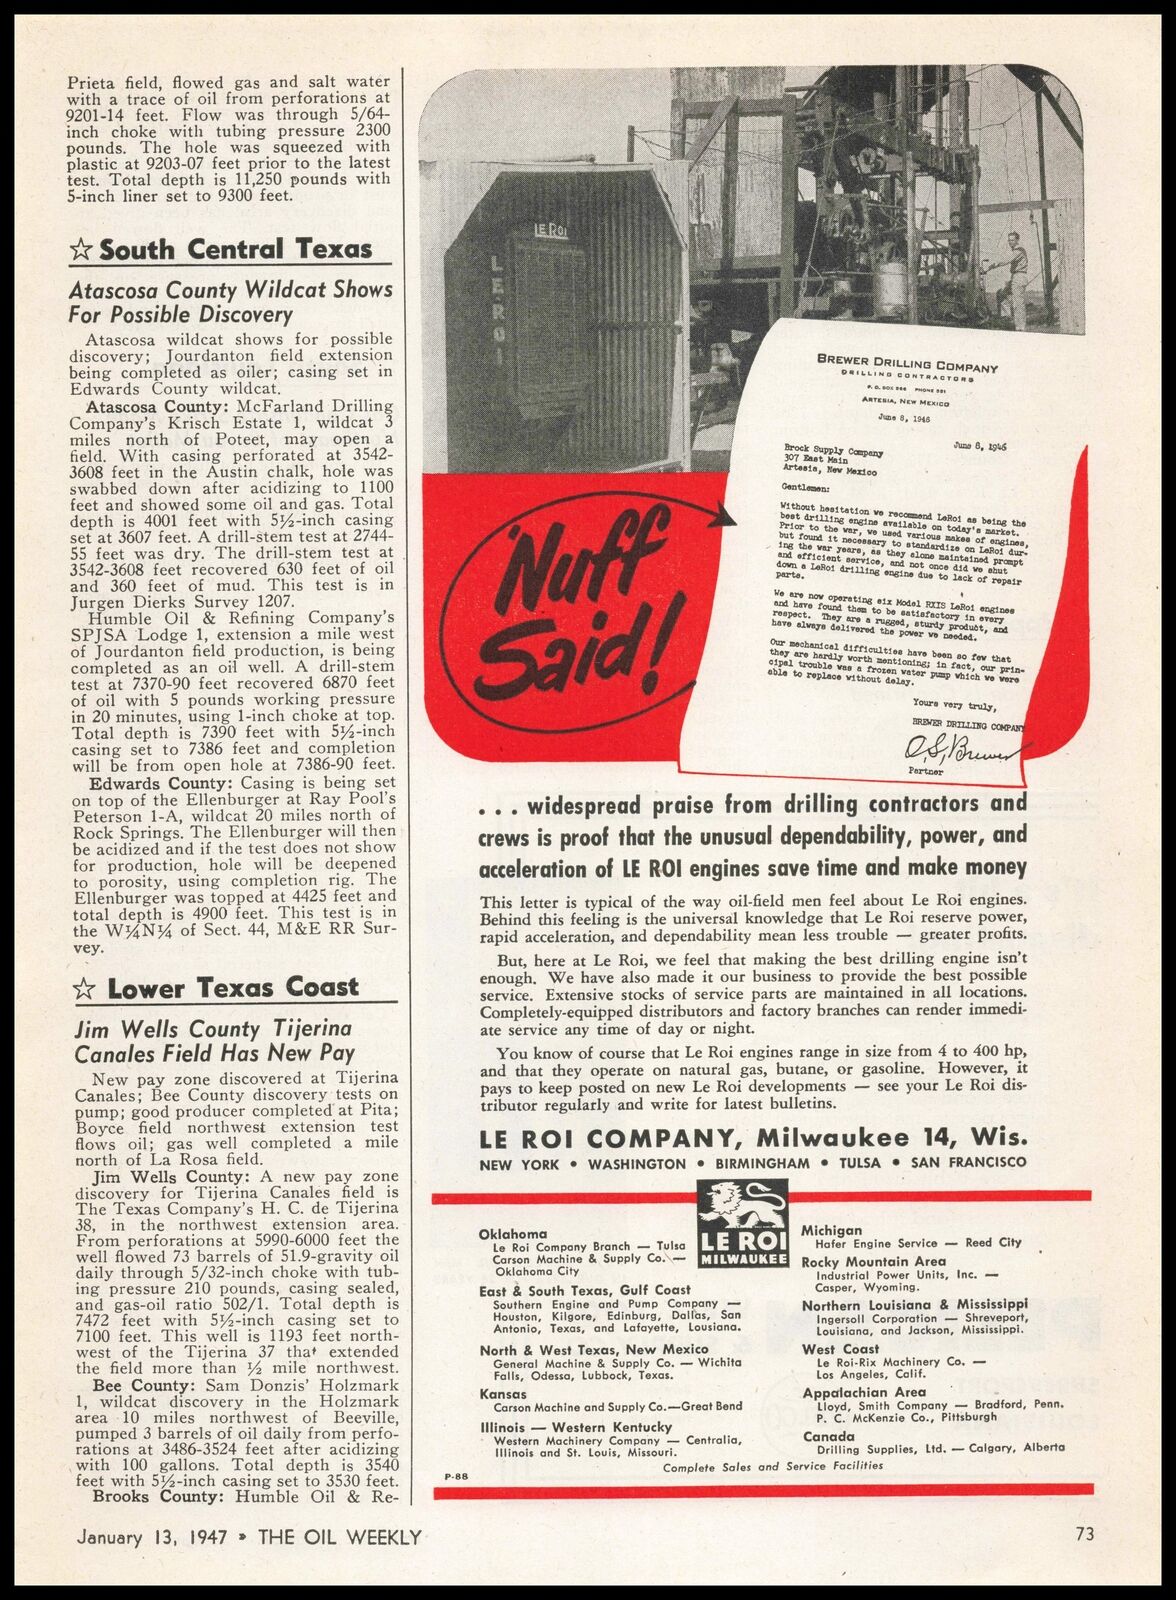 1947 Le Roi Company Milwaukee WI Brewer Drilling Co. Artesia New Mexico Print Ad